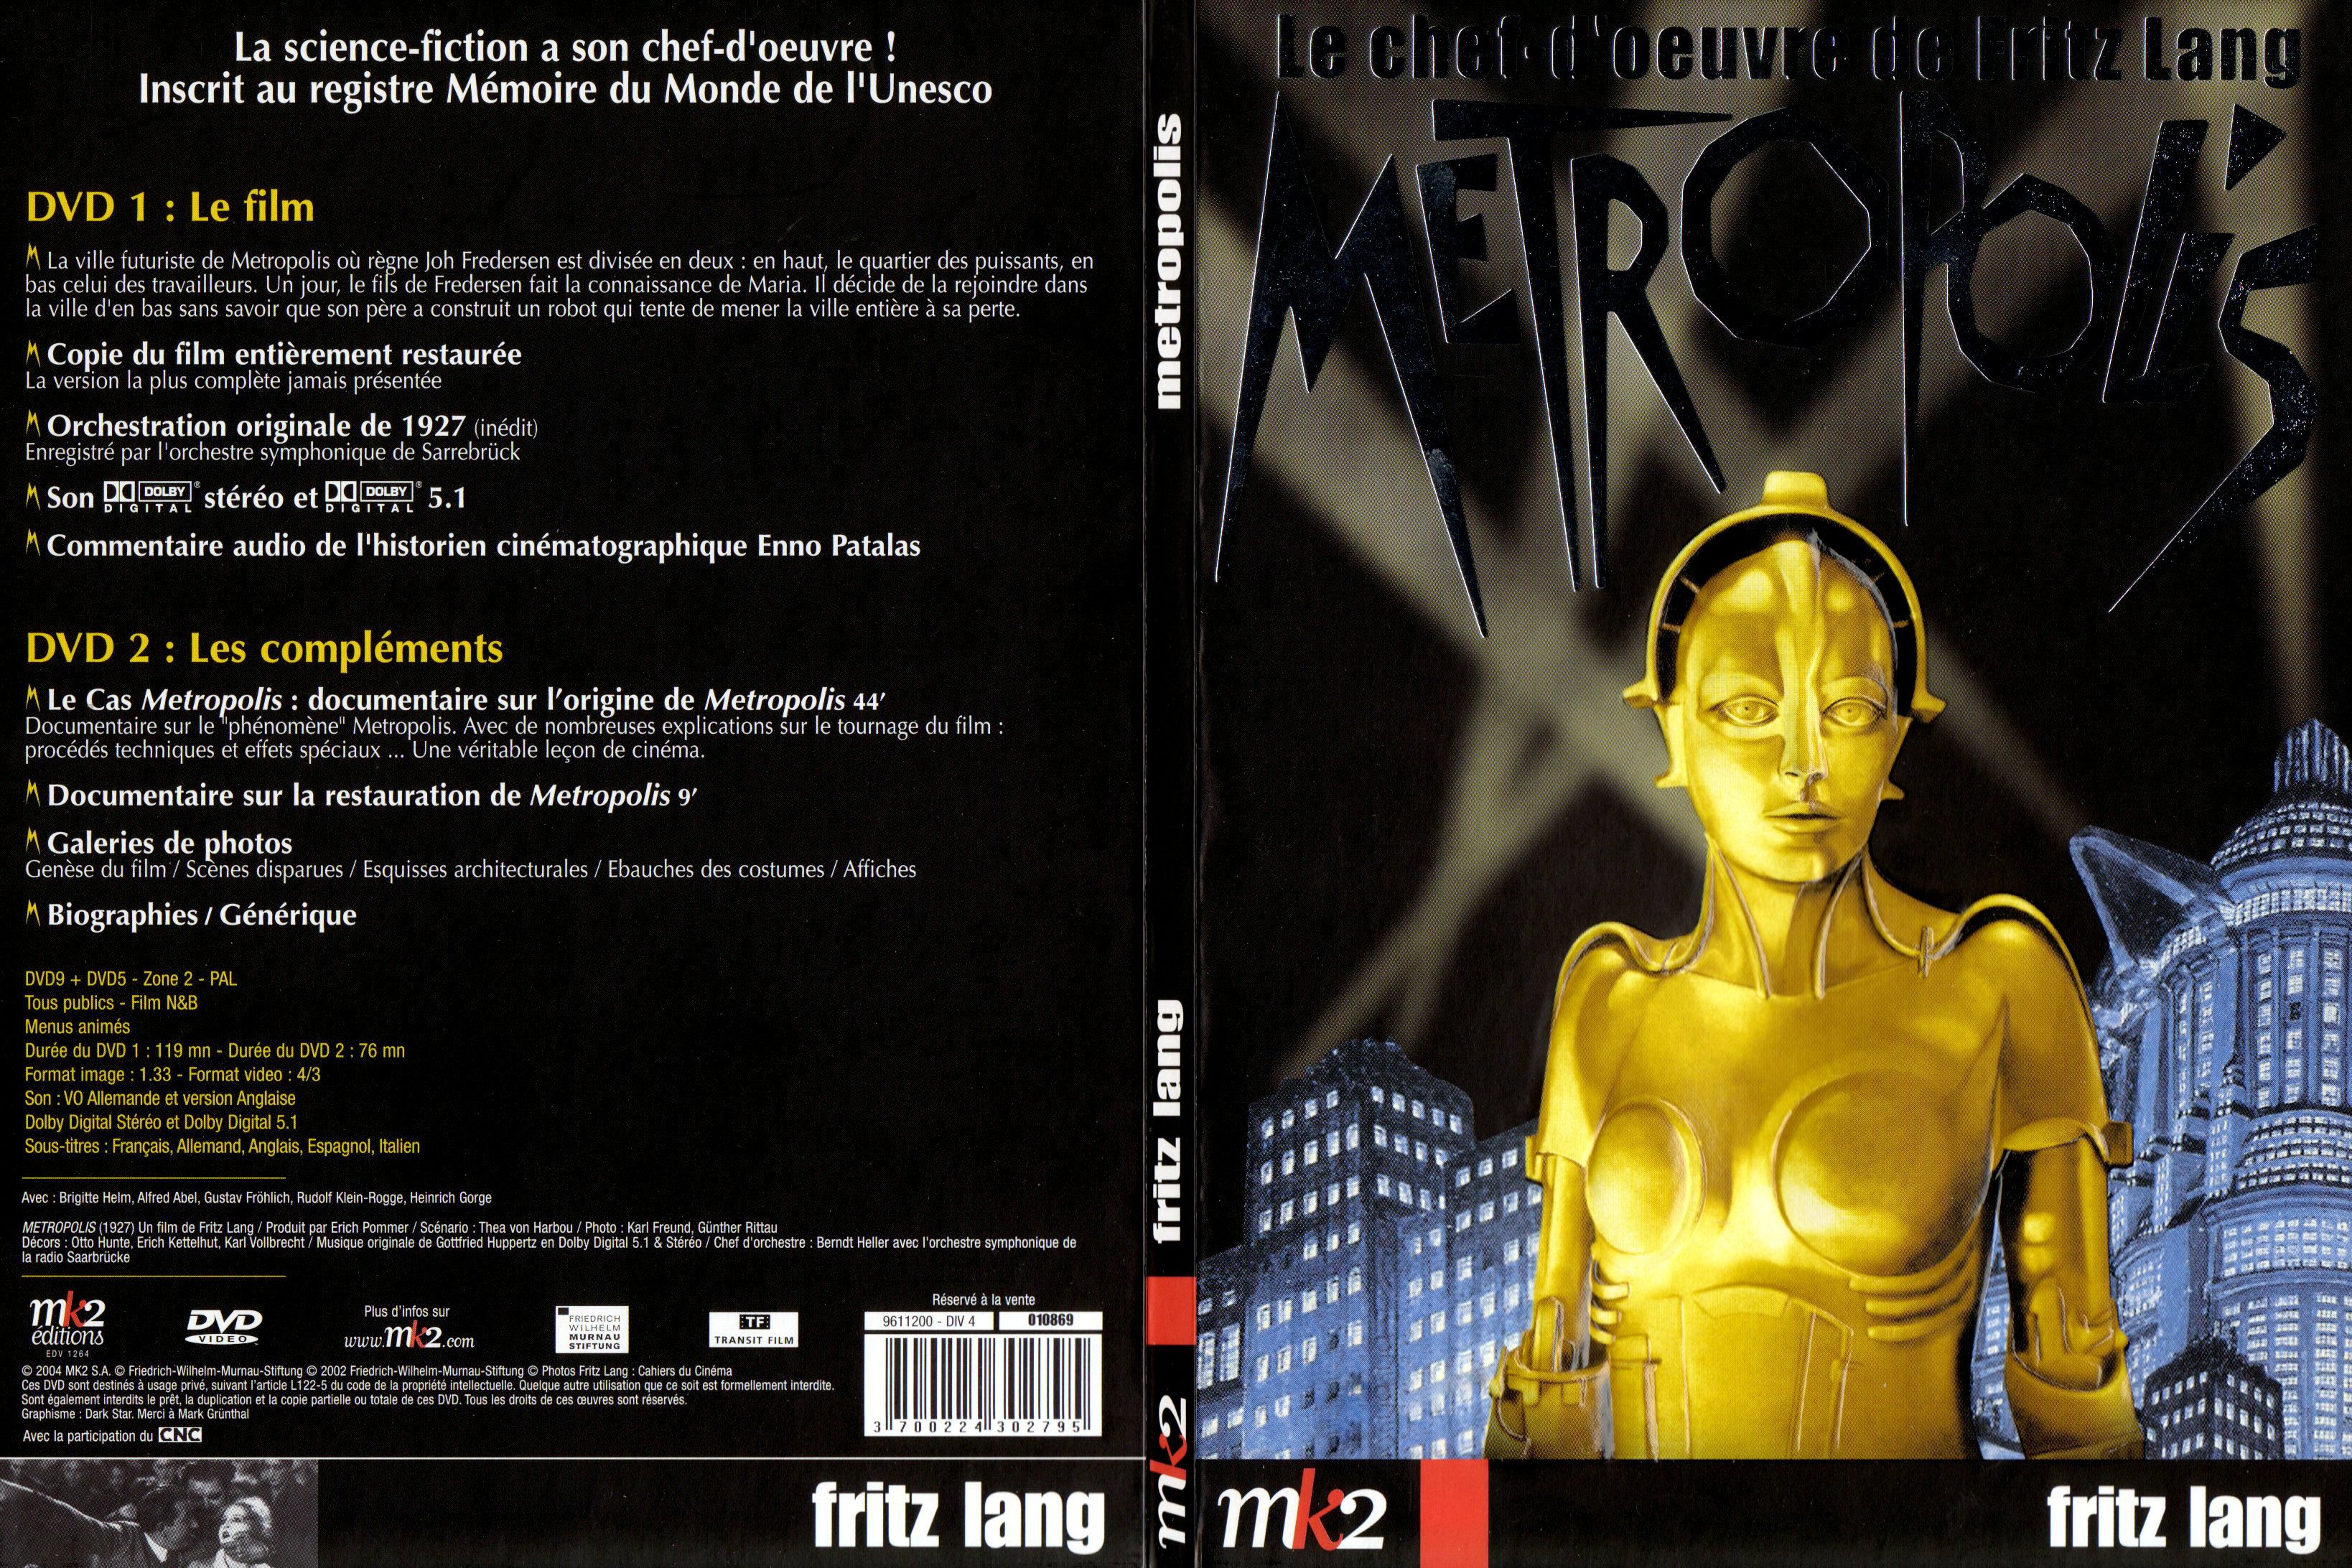 Jaquette DVD Metropolis (1927) - SLIM